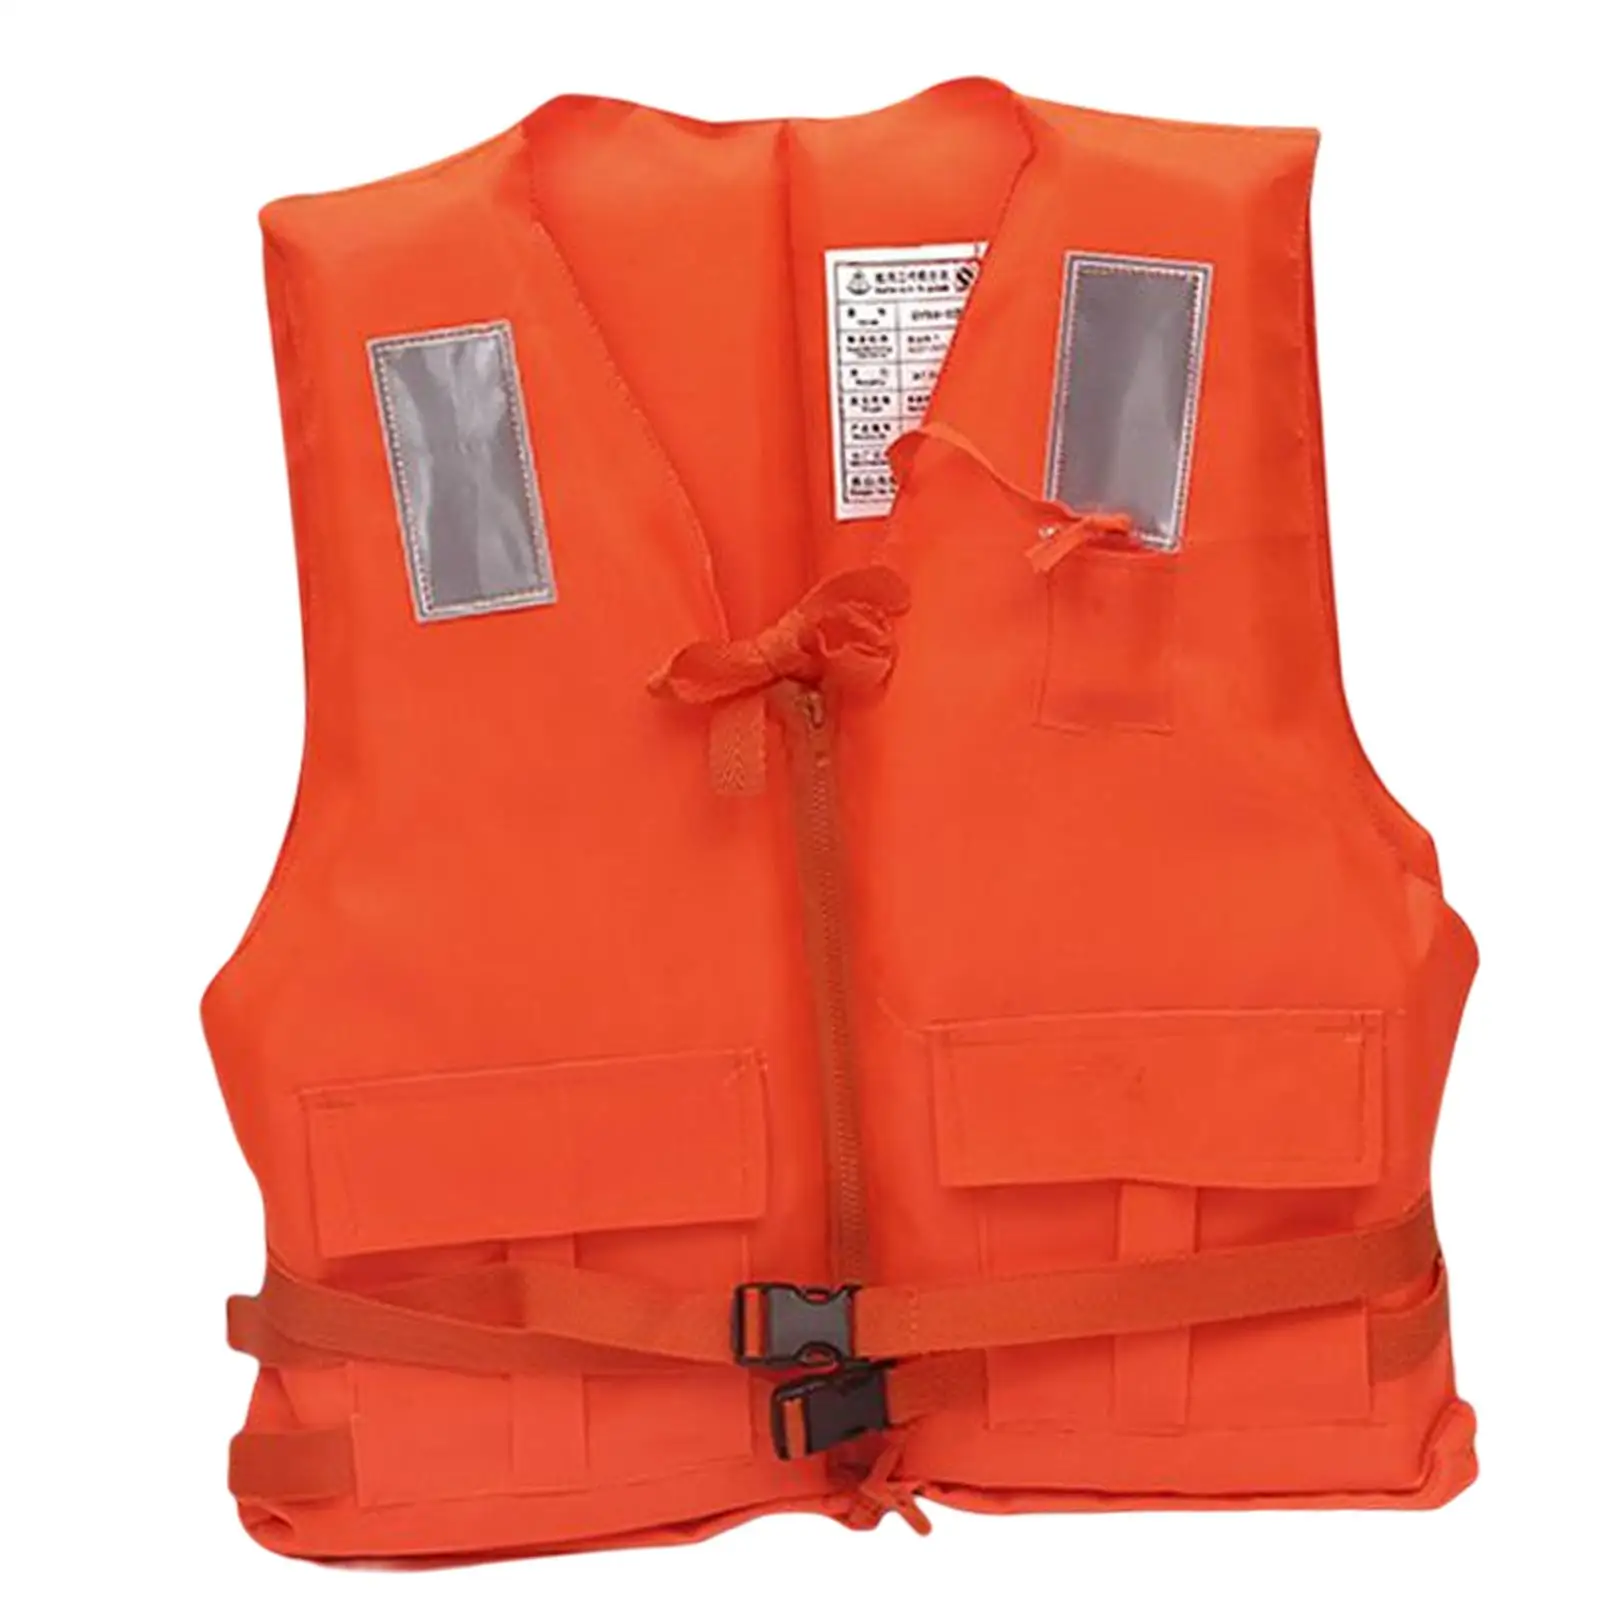 Adult Life Vest Fly Fishing Jacket Outdoor Life Jacket for Adult Ski Kayak